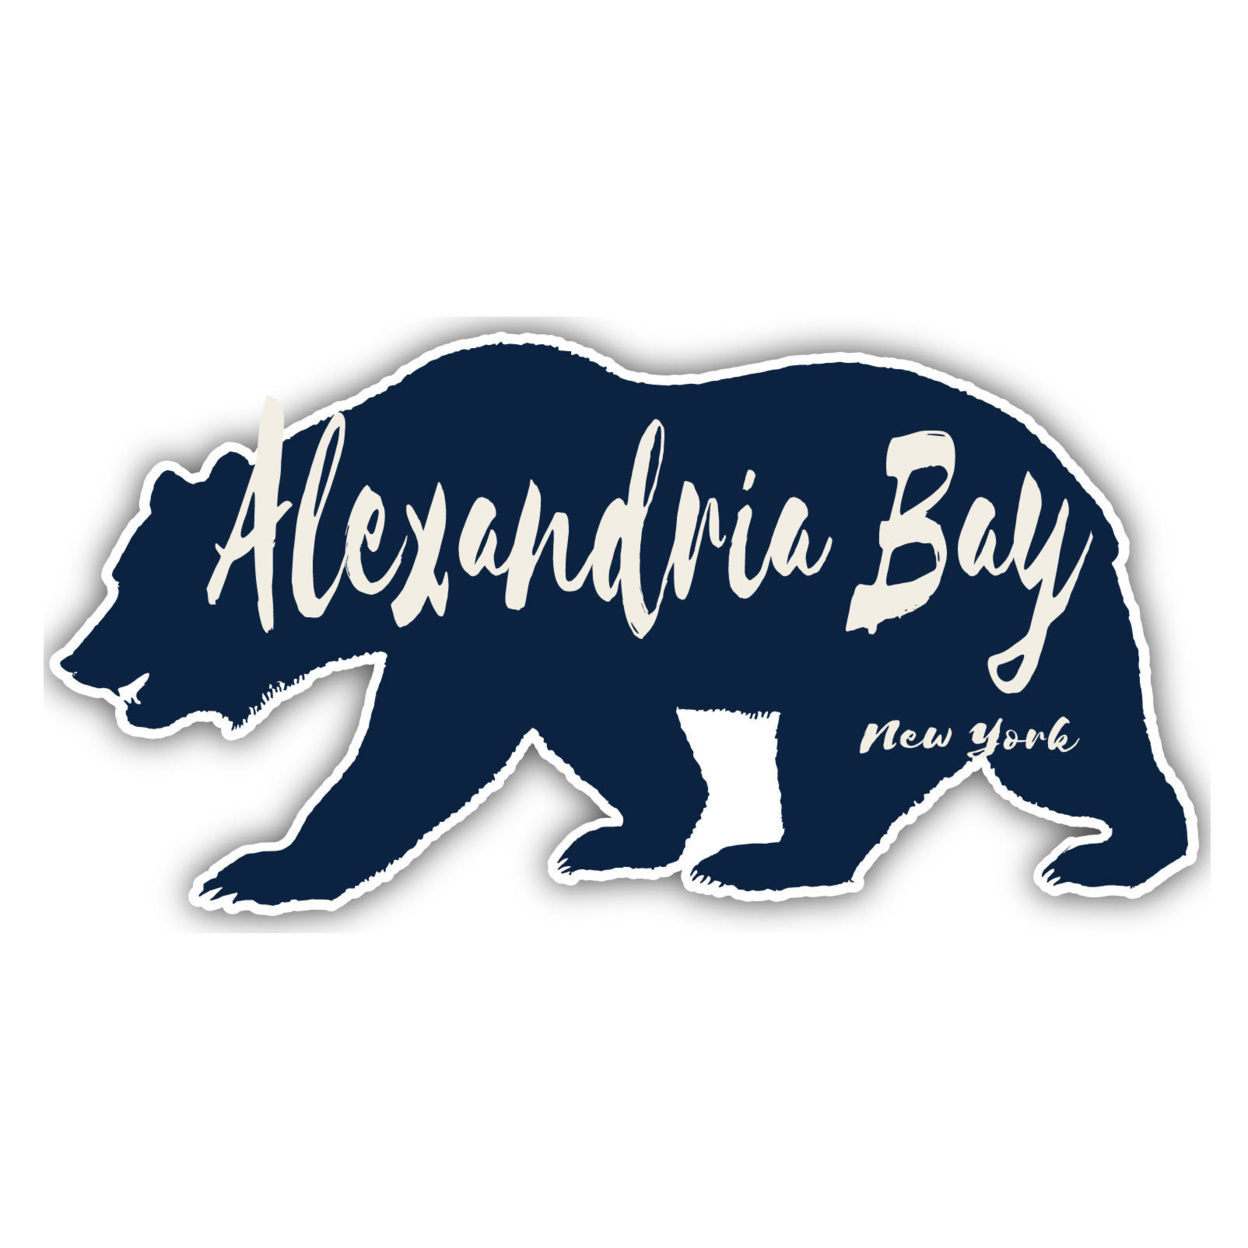 Alexandria Bay New York Souvenir Decorative Stickers (Choose Theme And Size) - Single Unit, 10-Inch, Tent